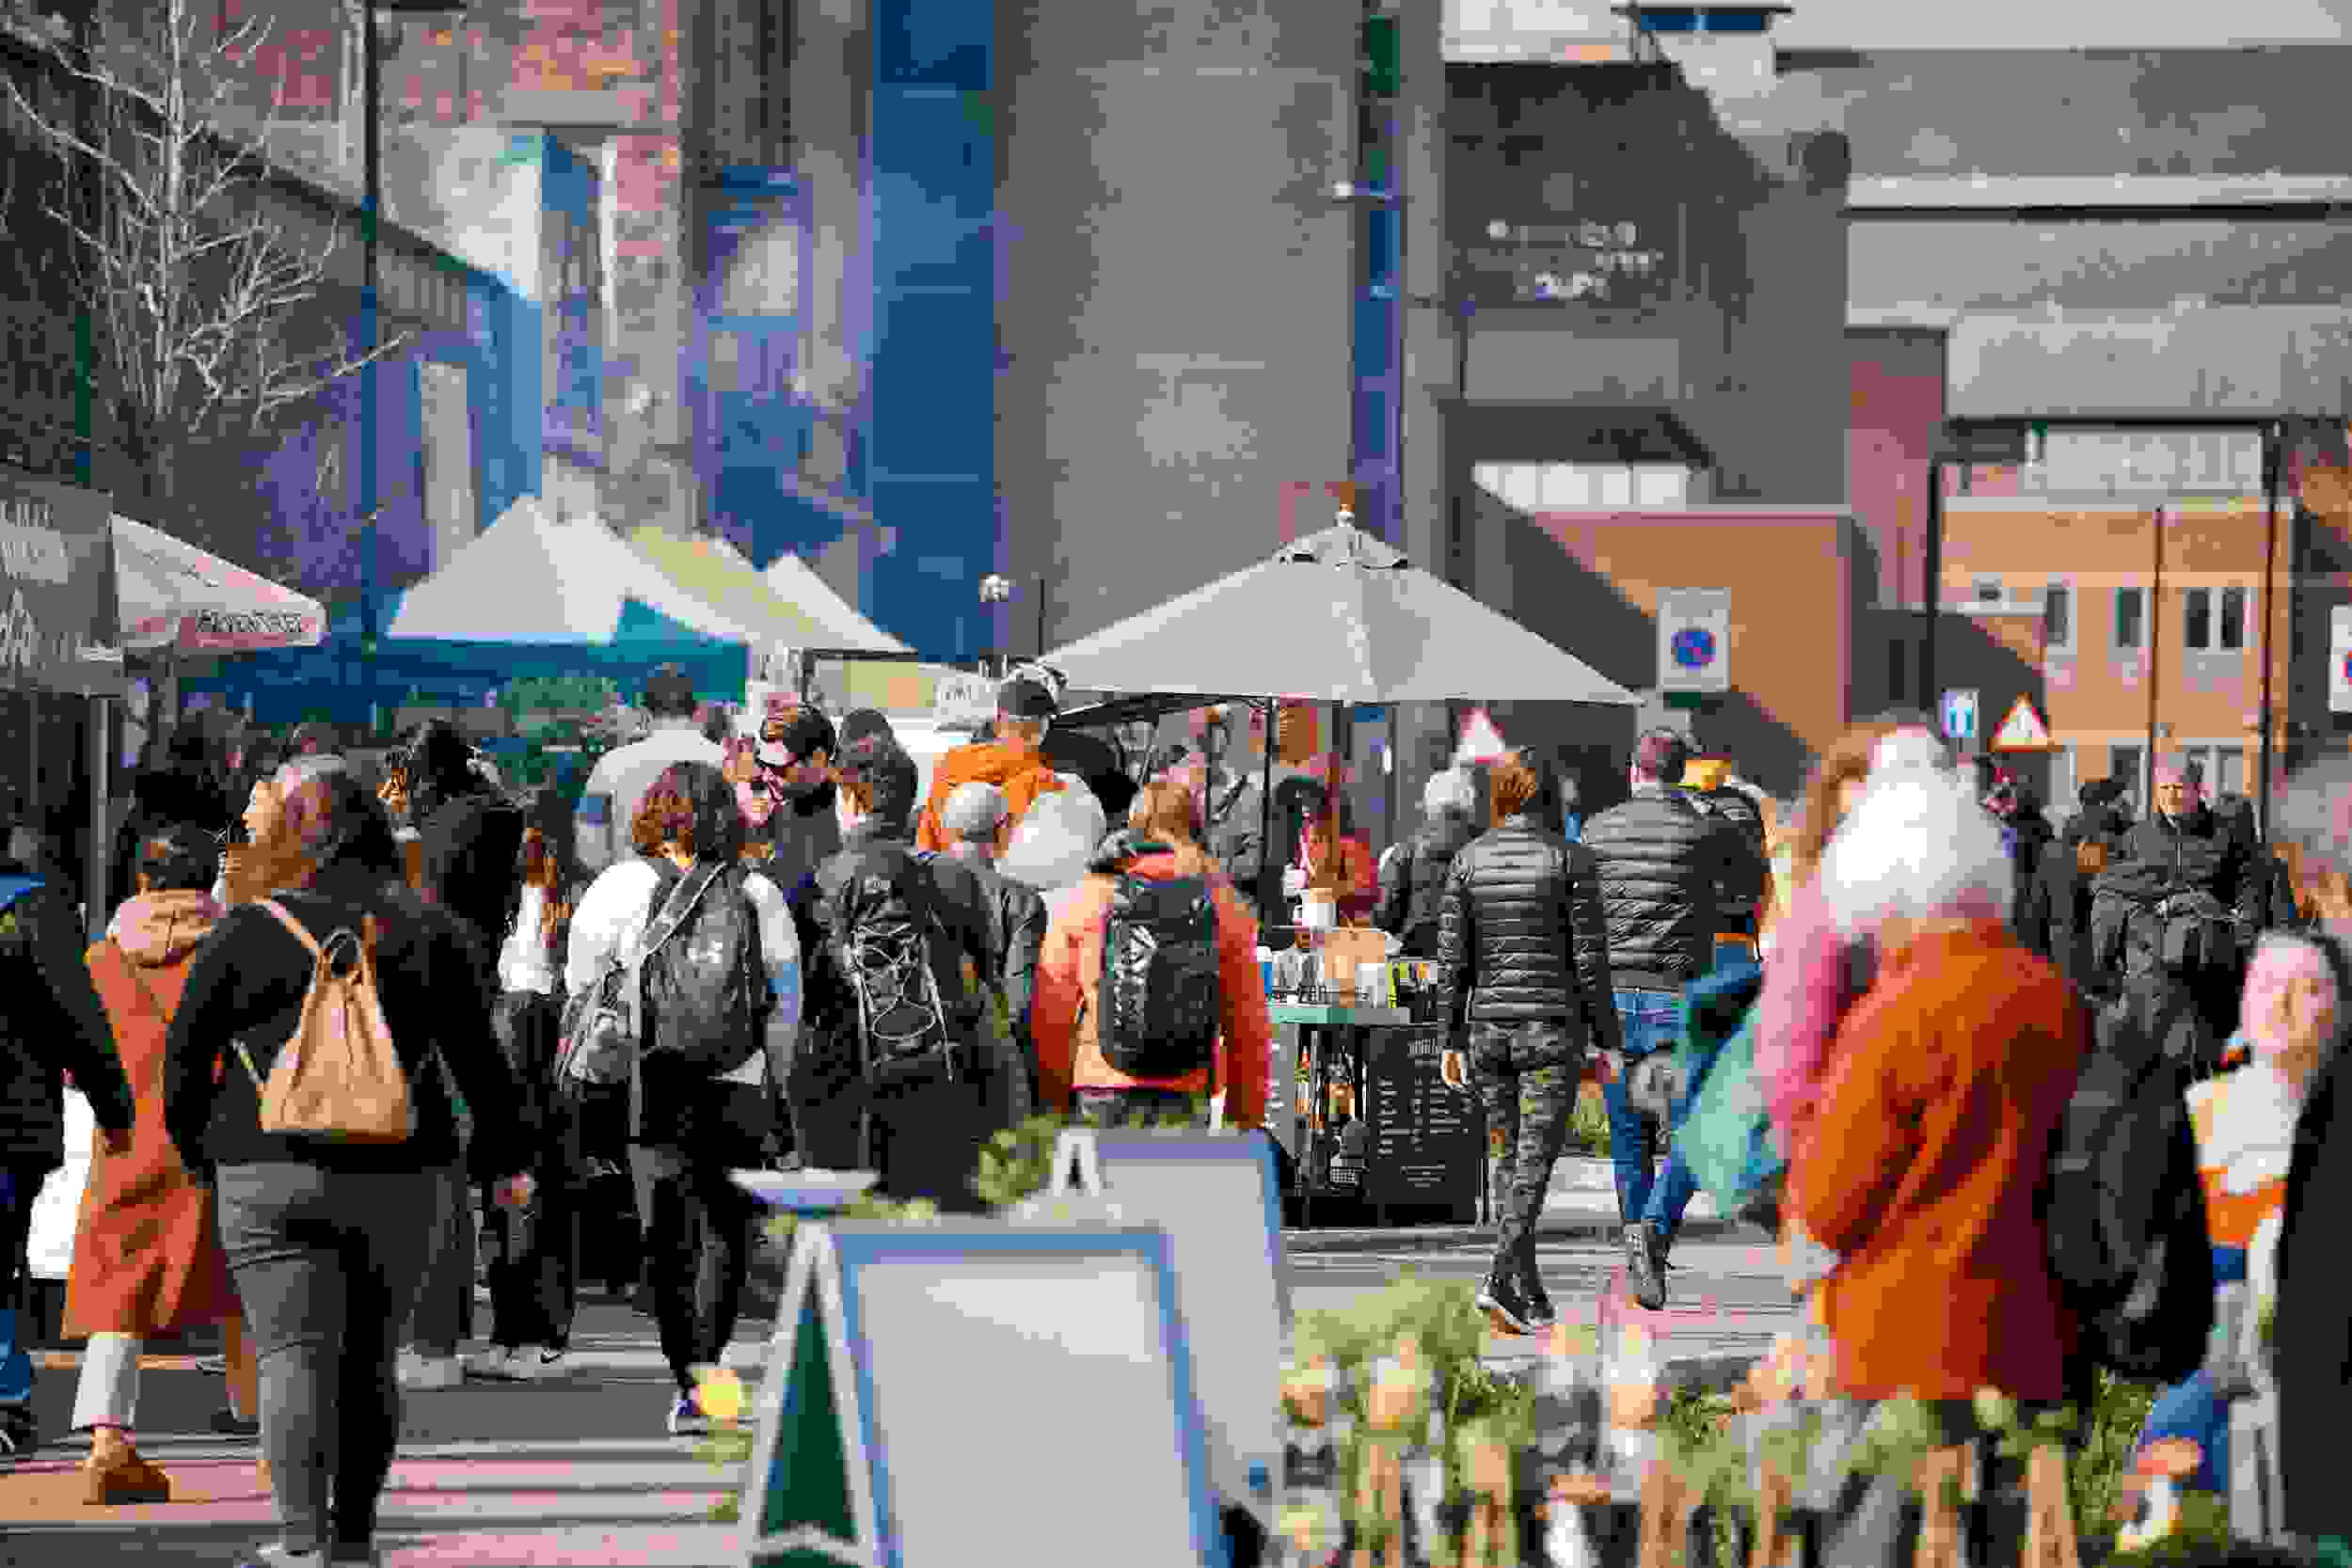 People walking through a city centre market